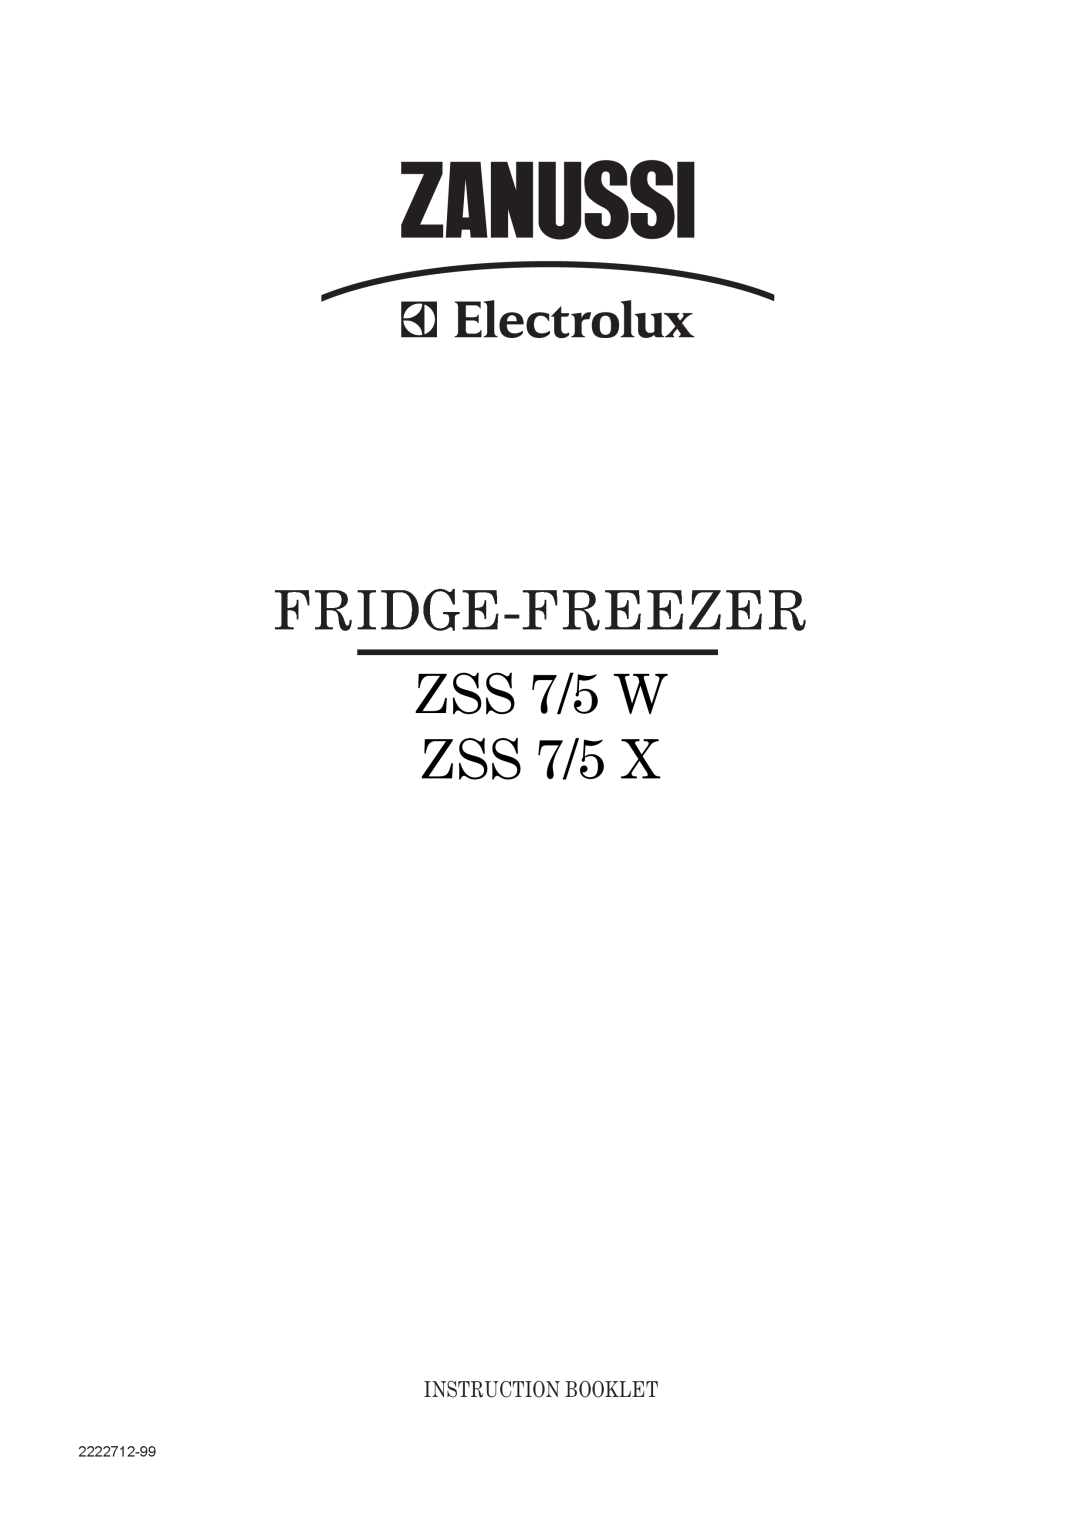 Zanussi ZSS 7/5 X manual Fridge-Freezer, ZSS 7/5 W ZSS 7/5, Instruction Booklet, 2222712-99 